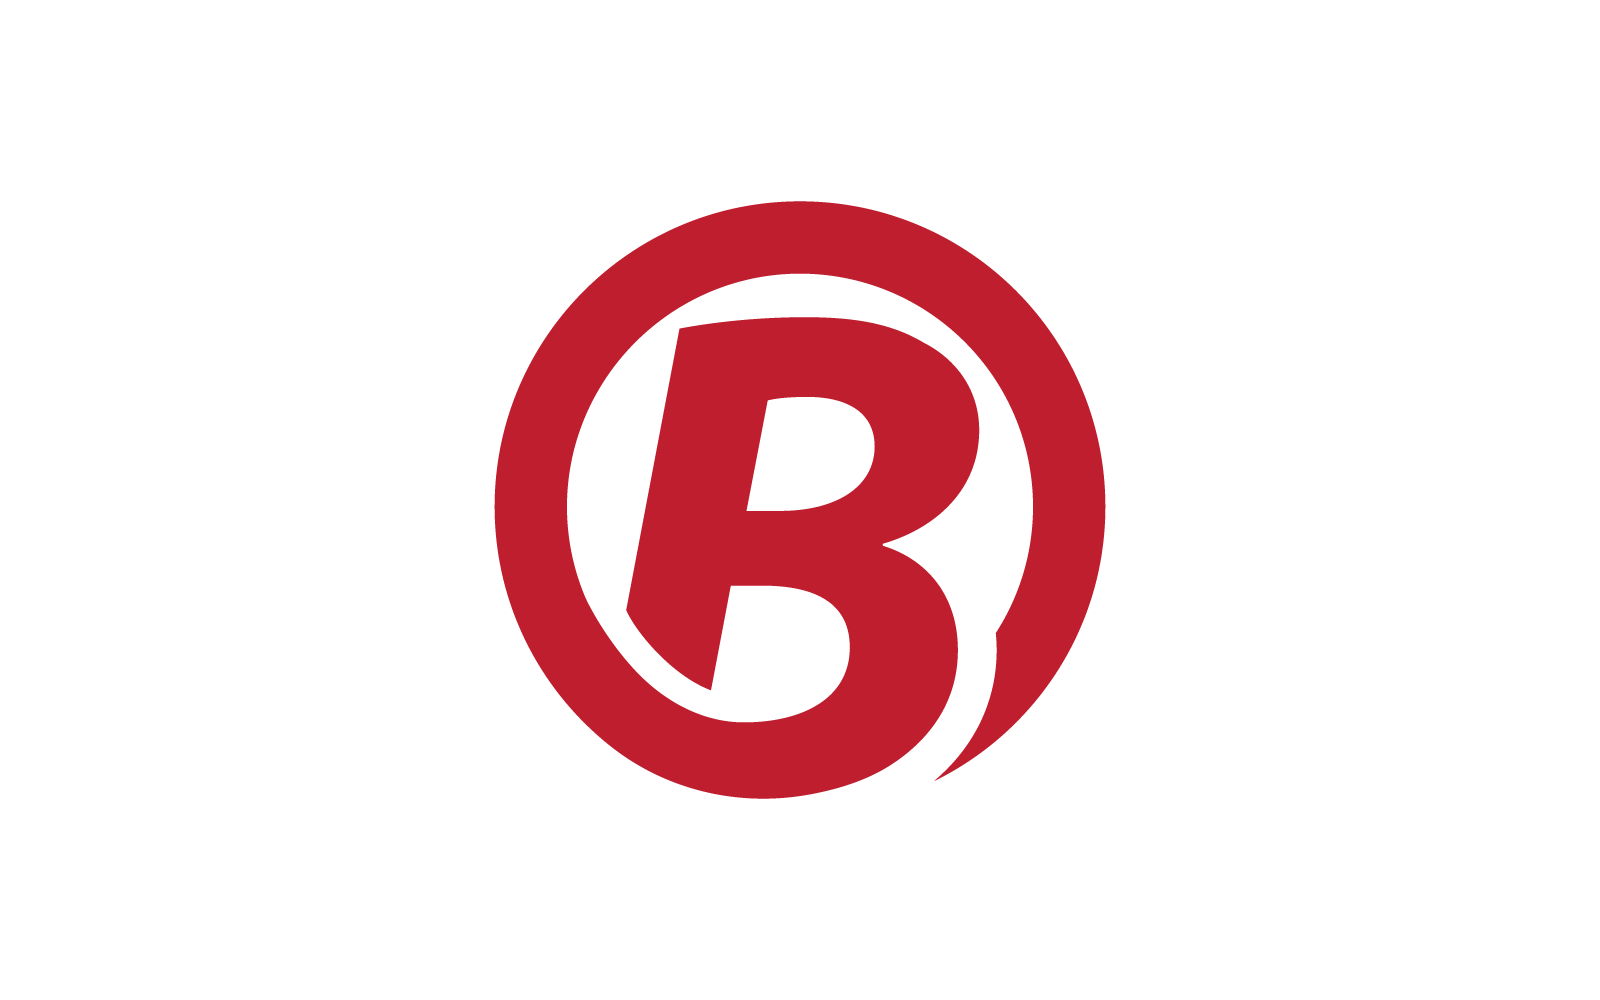 Modern B Initial letter alphabet font logo vector design